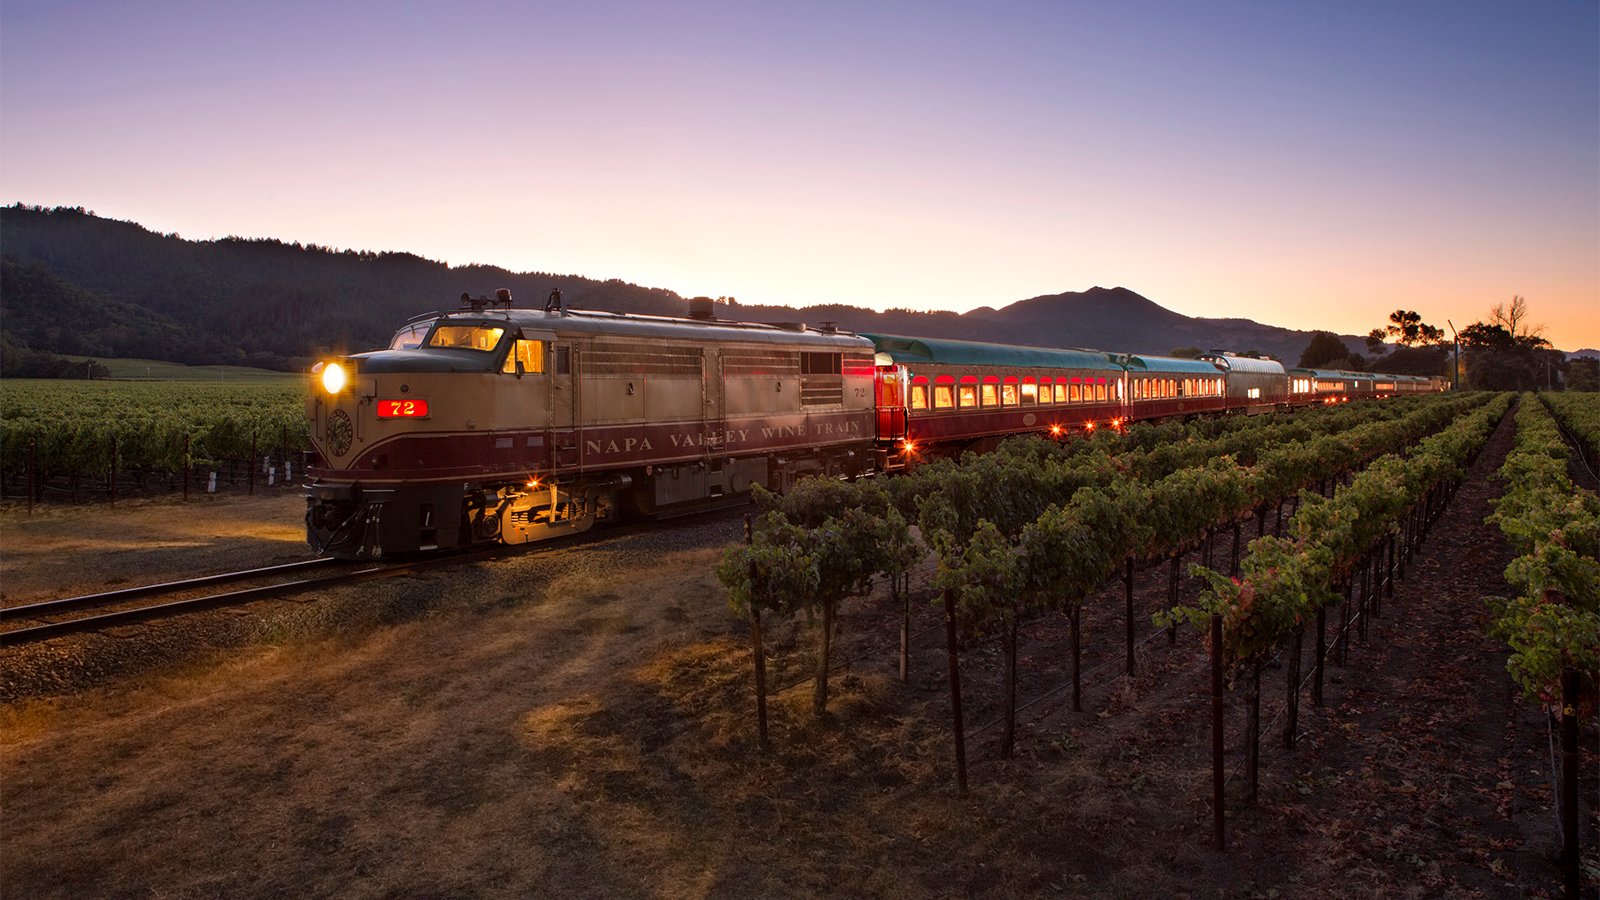 TheNapa Valley Wine Train